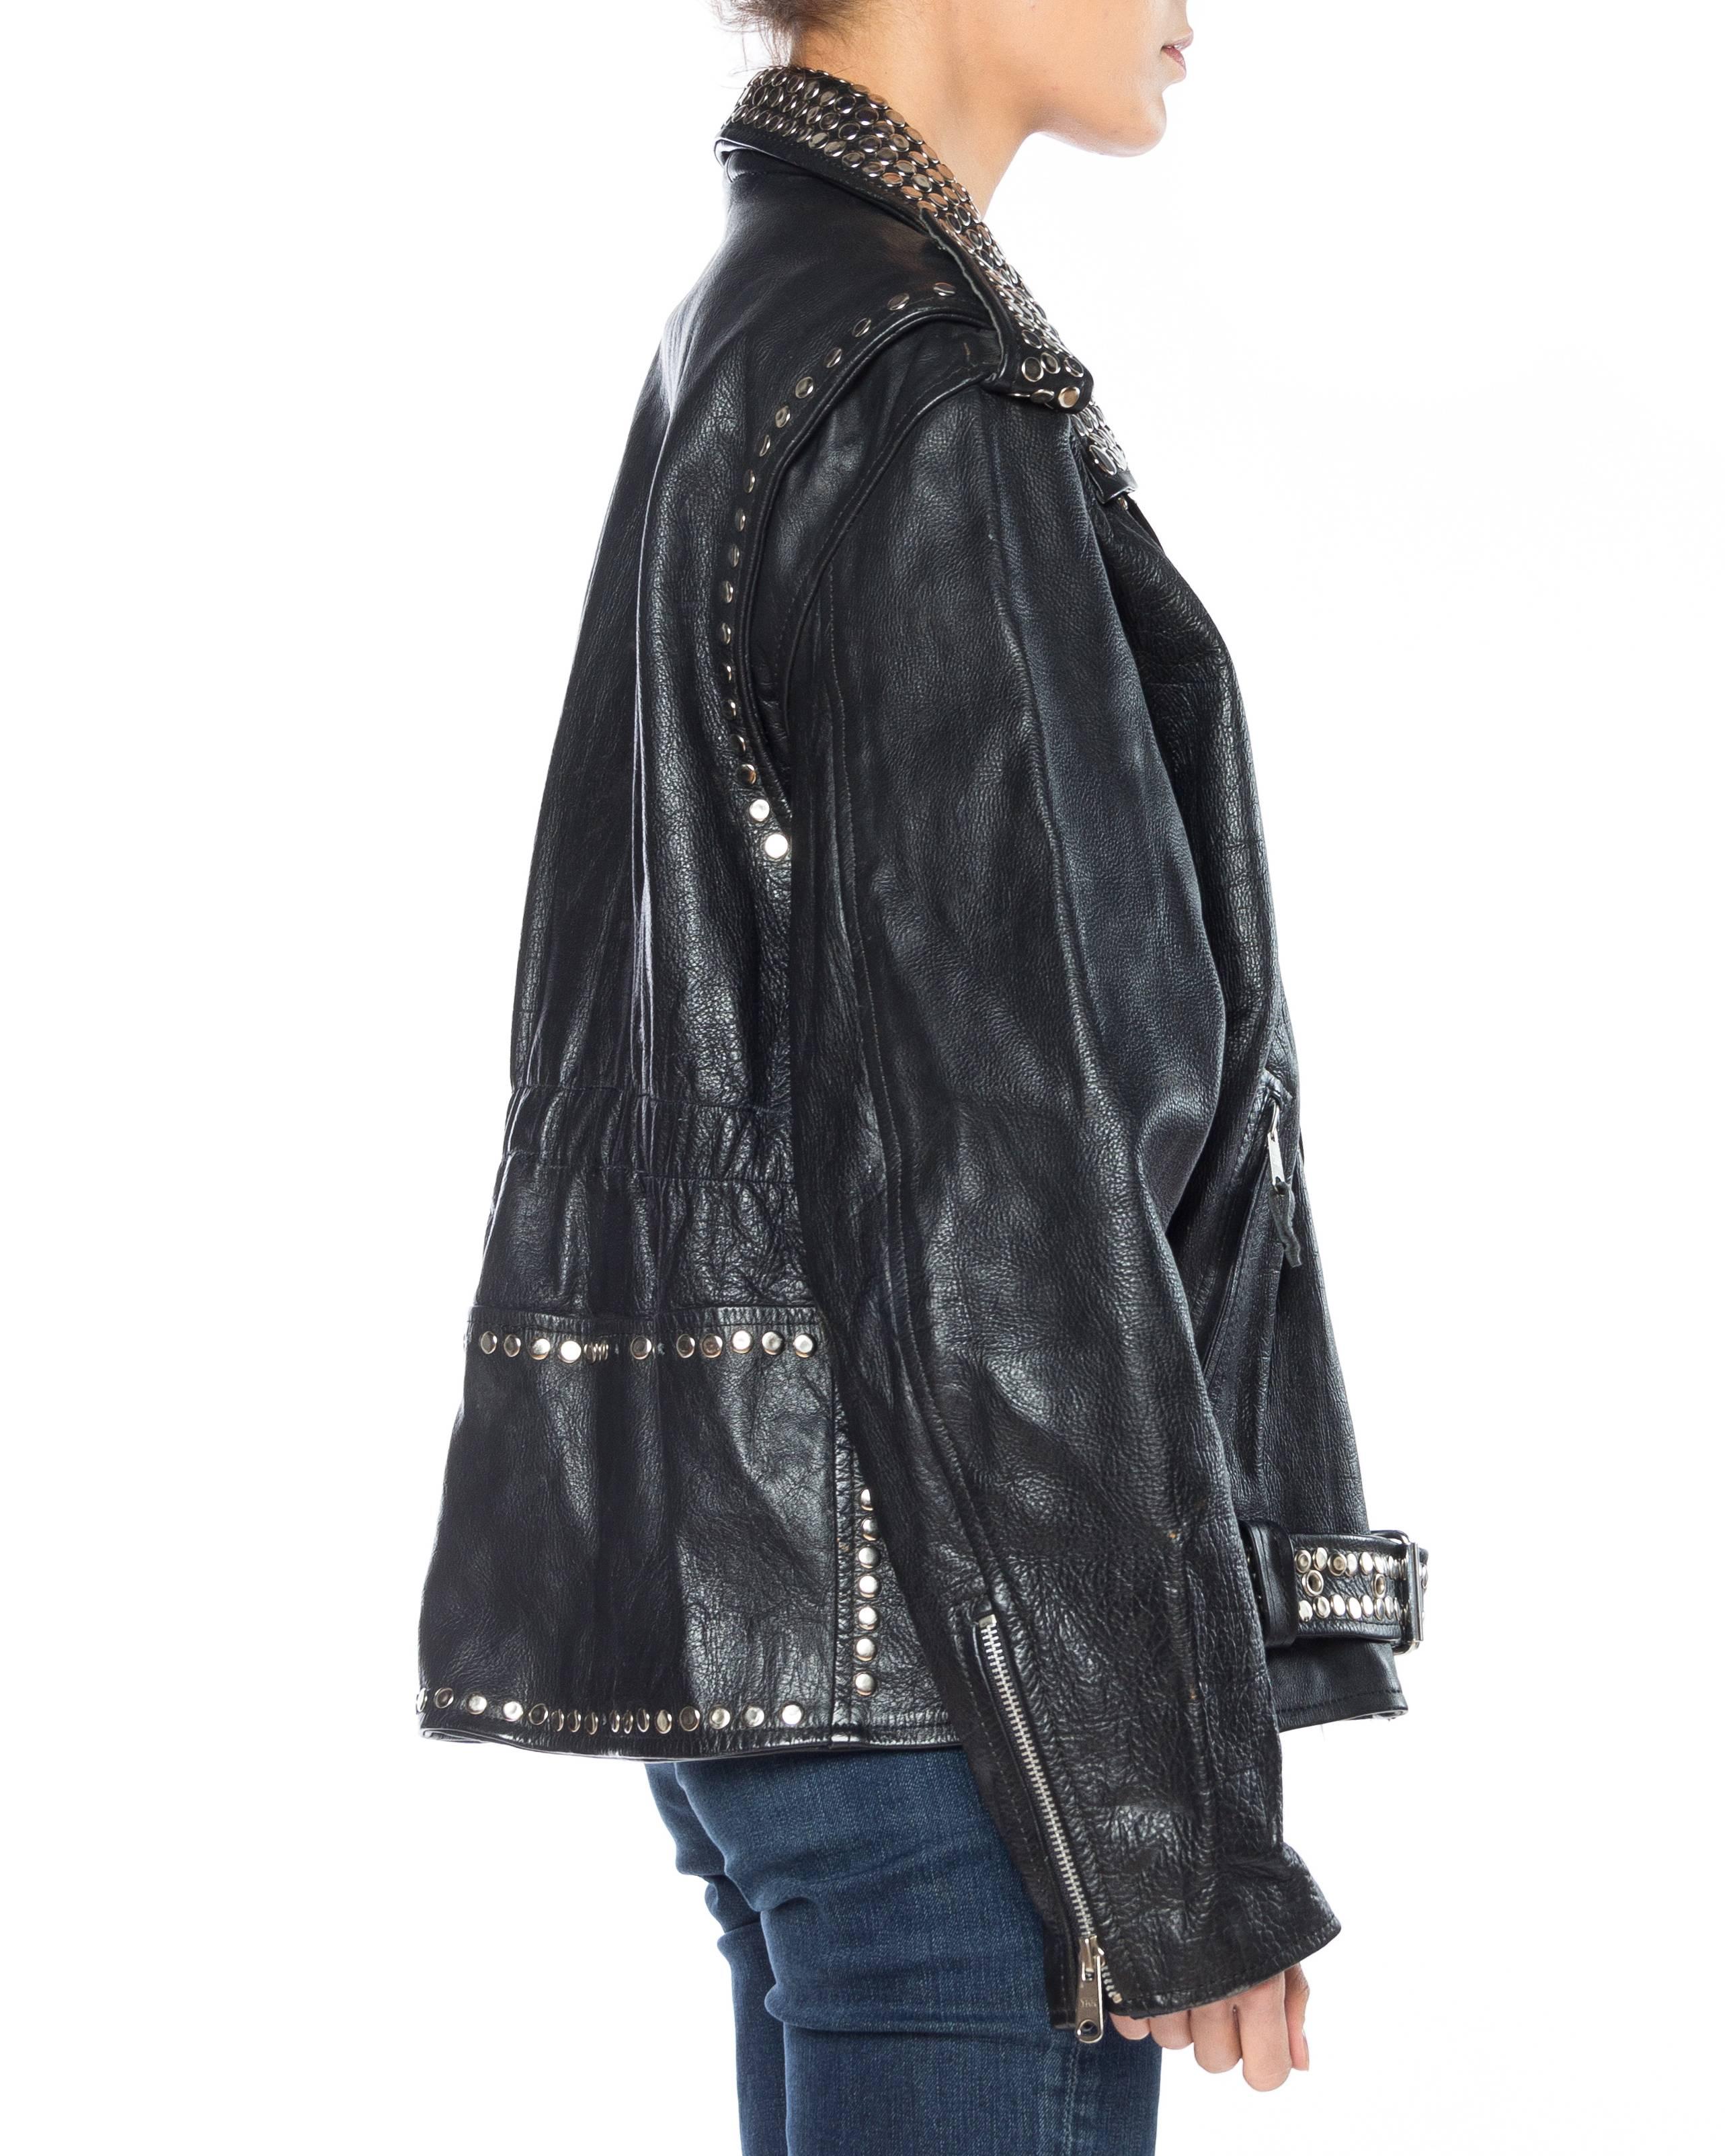 Women's or Men's Studded Punk Leather Biker Jacket 